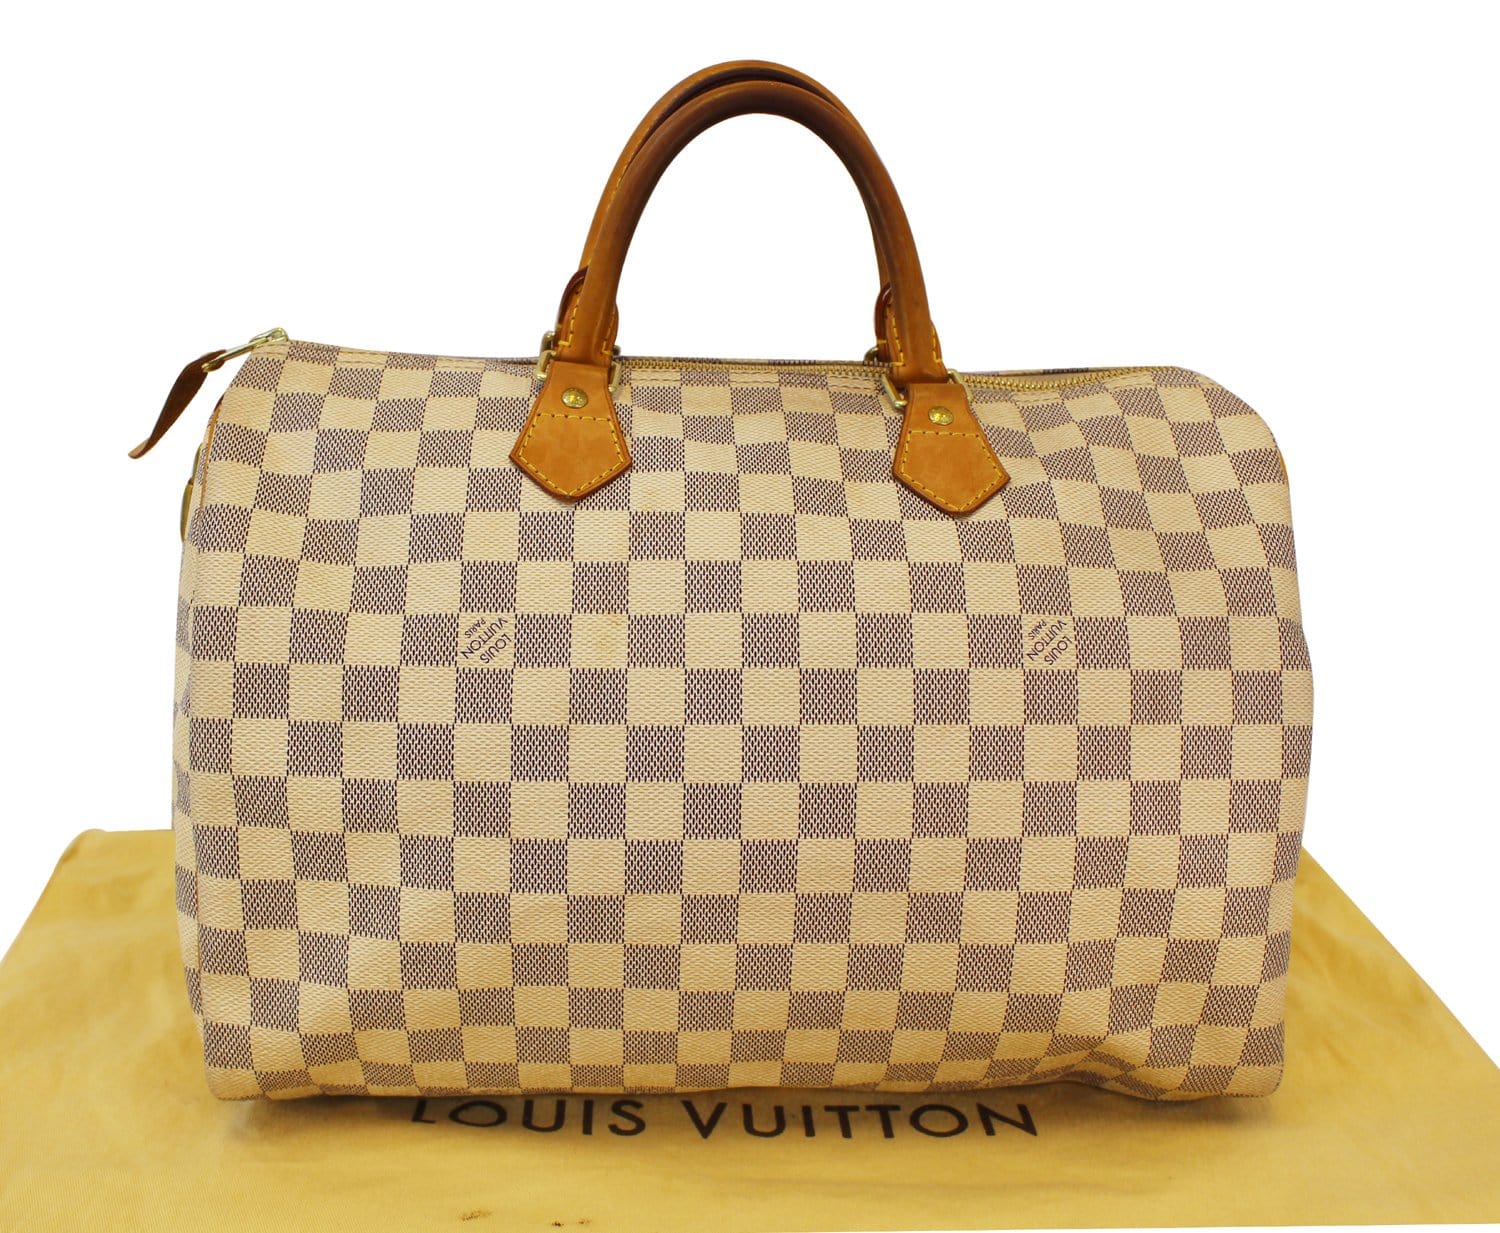 Louis Vuitton Speedy 35 Damier Azur Shoulder Bag